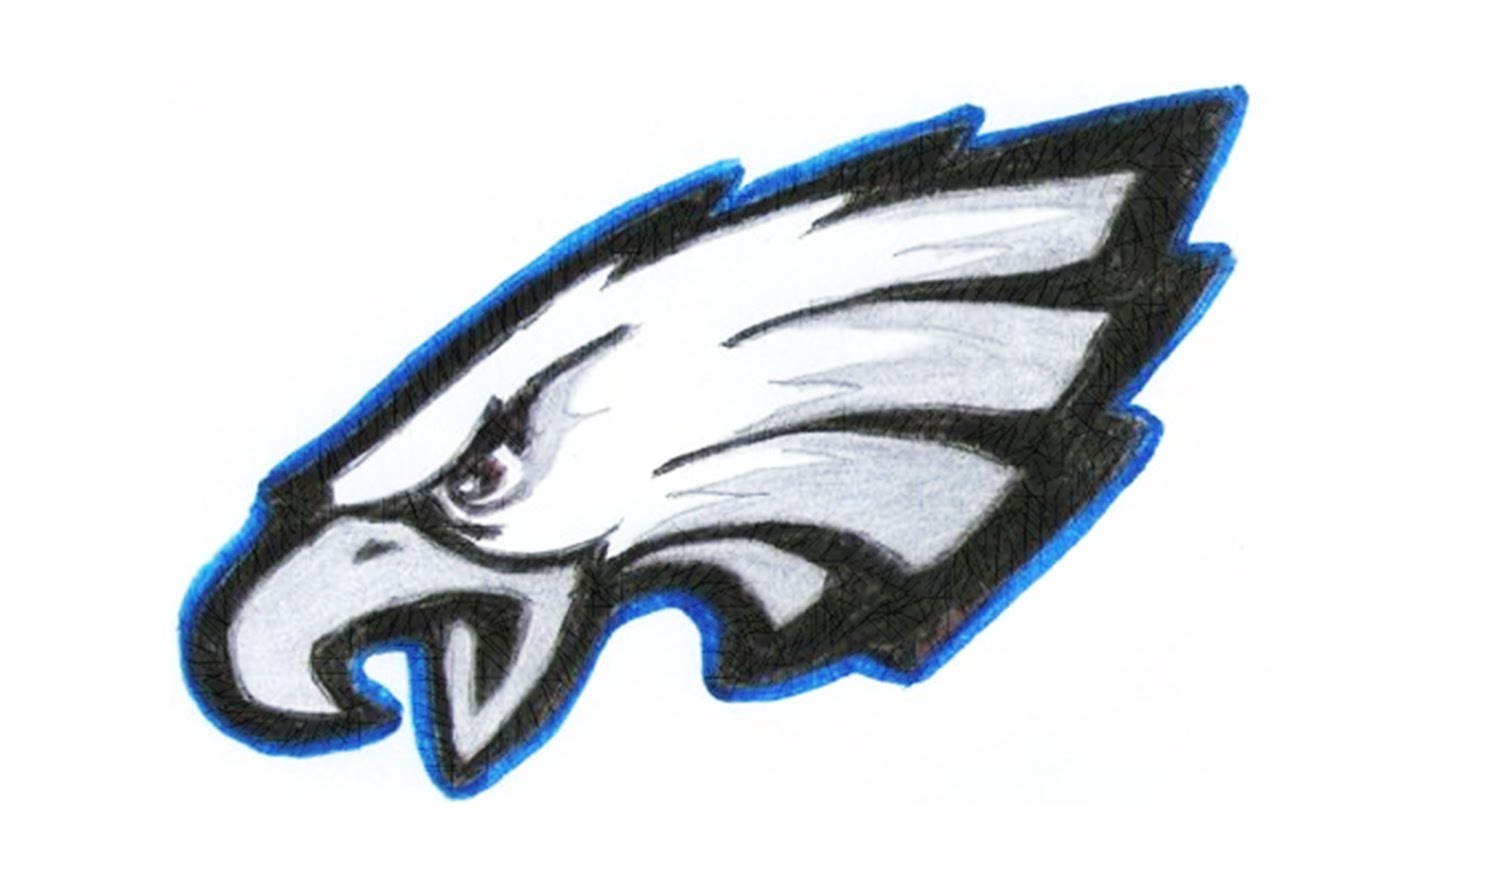 Eagles Logo Drawing at GetDrawings Free download